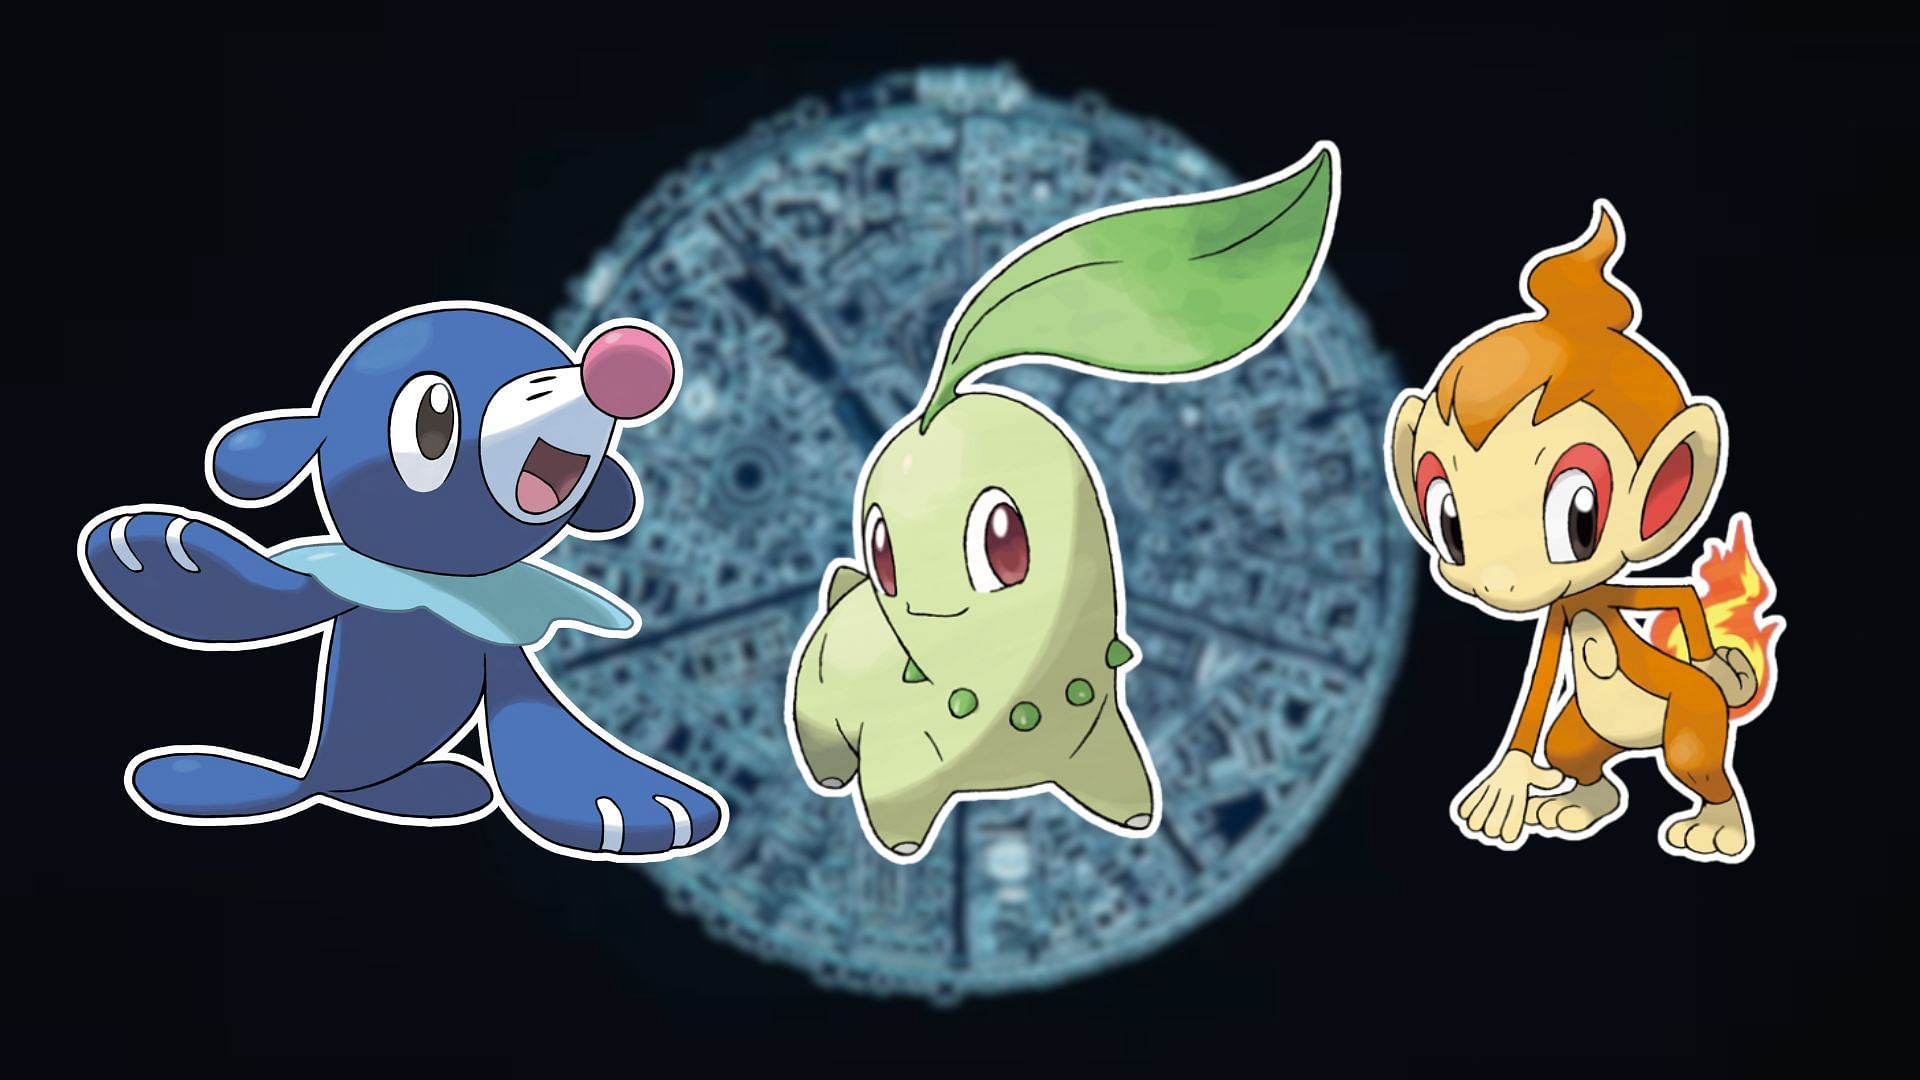 Popplio, Chikorita and Chimchar (Image via The Pokemon Company)